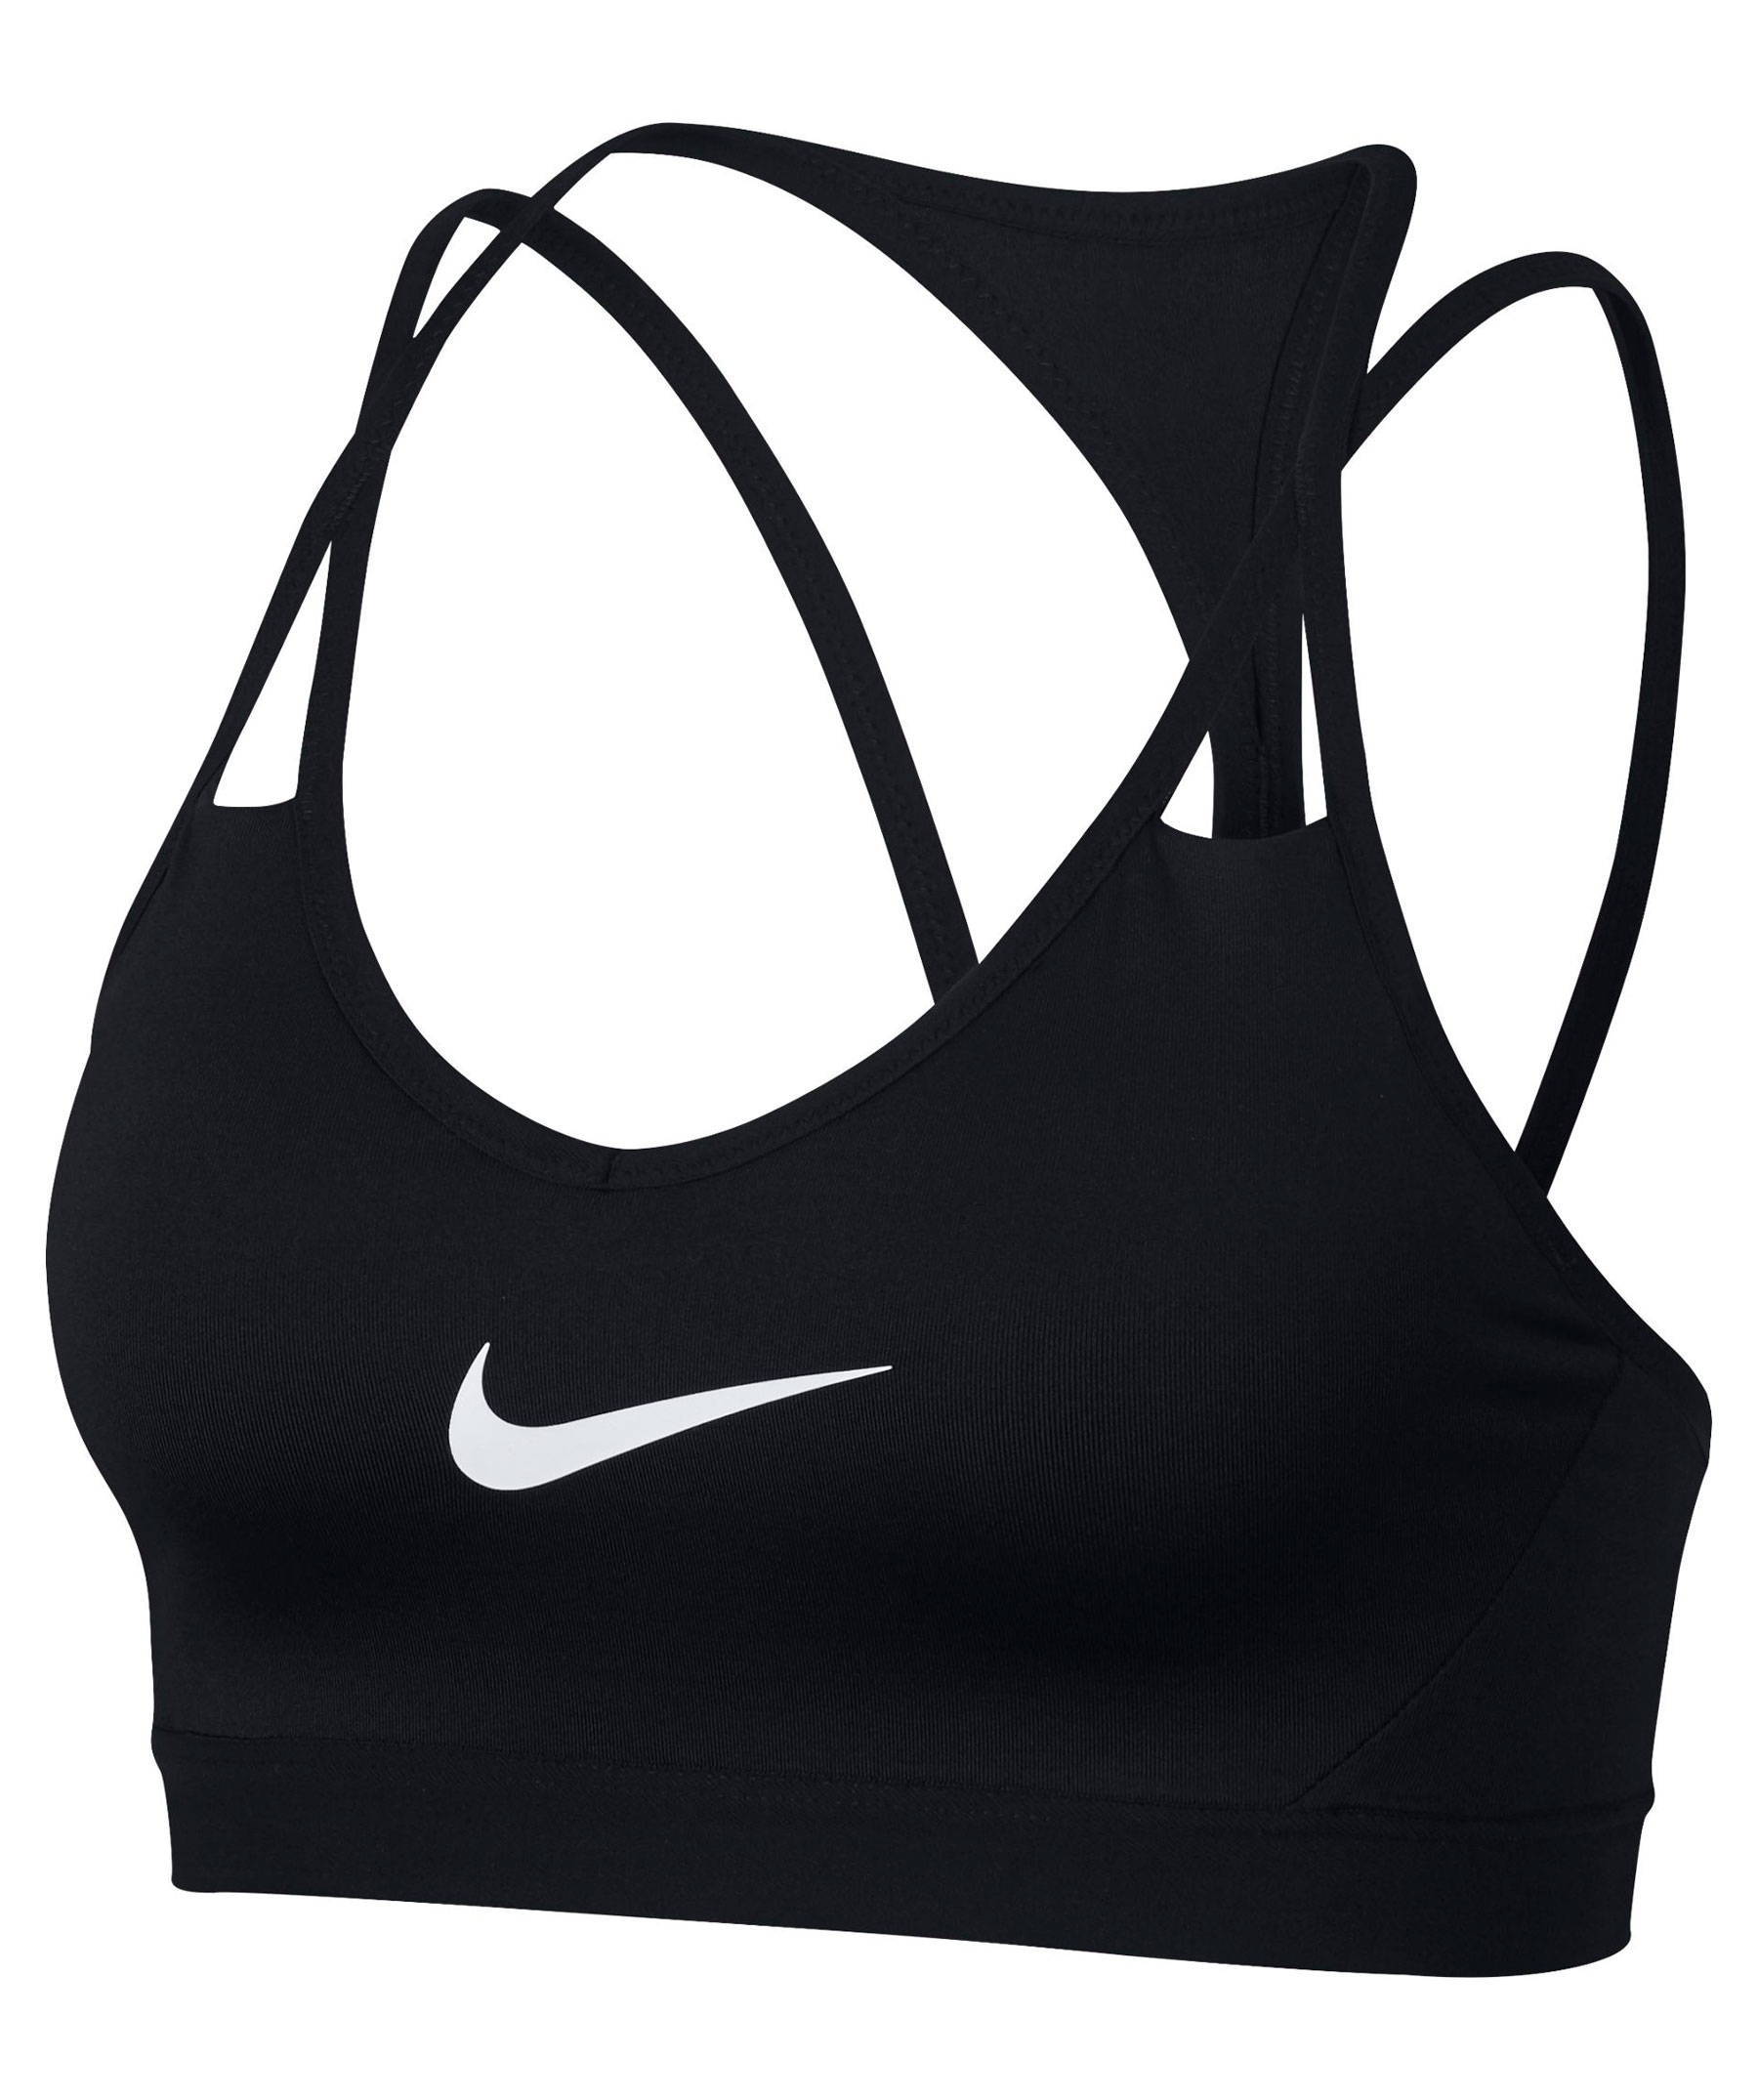 Nike Damen Sport-BH / Bustier 